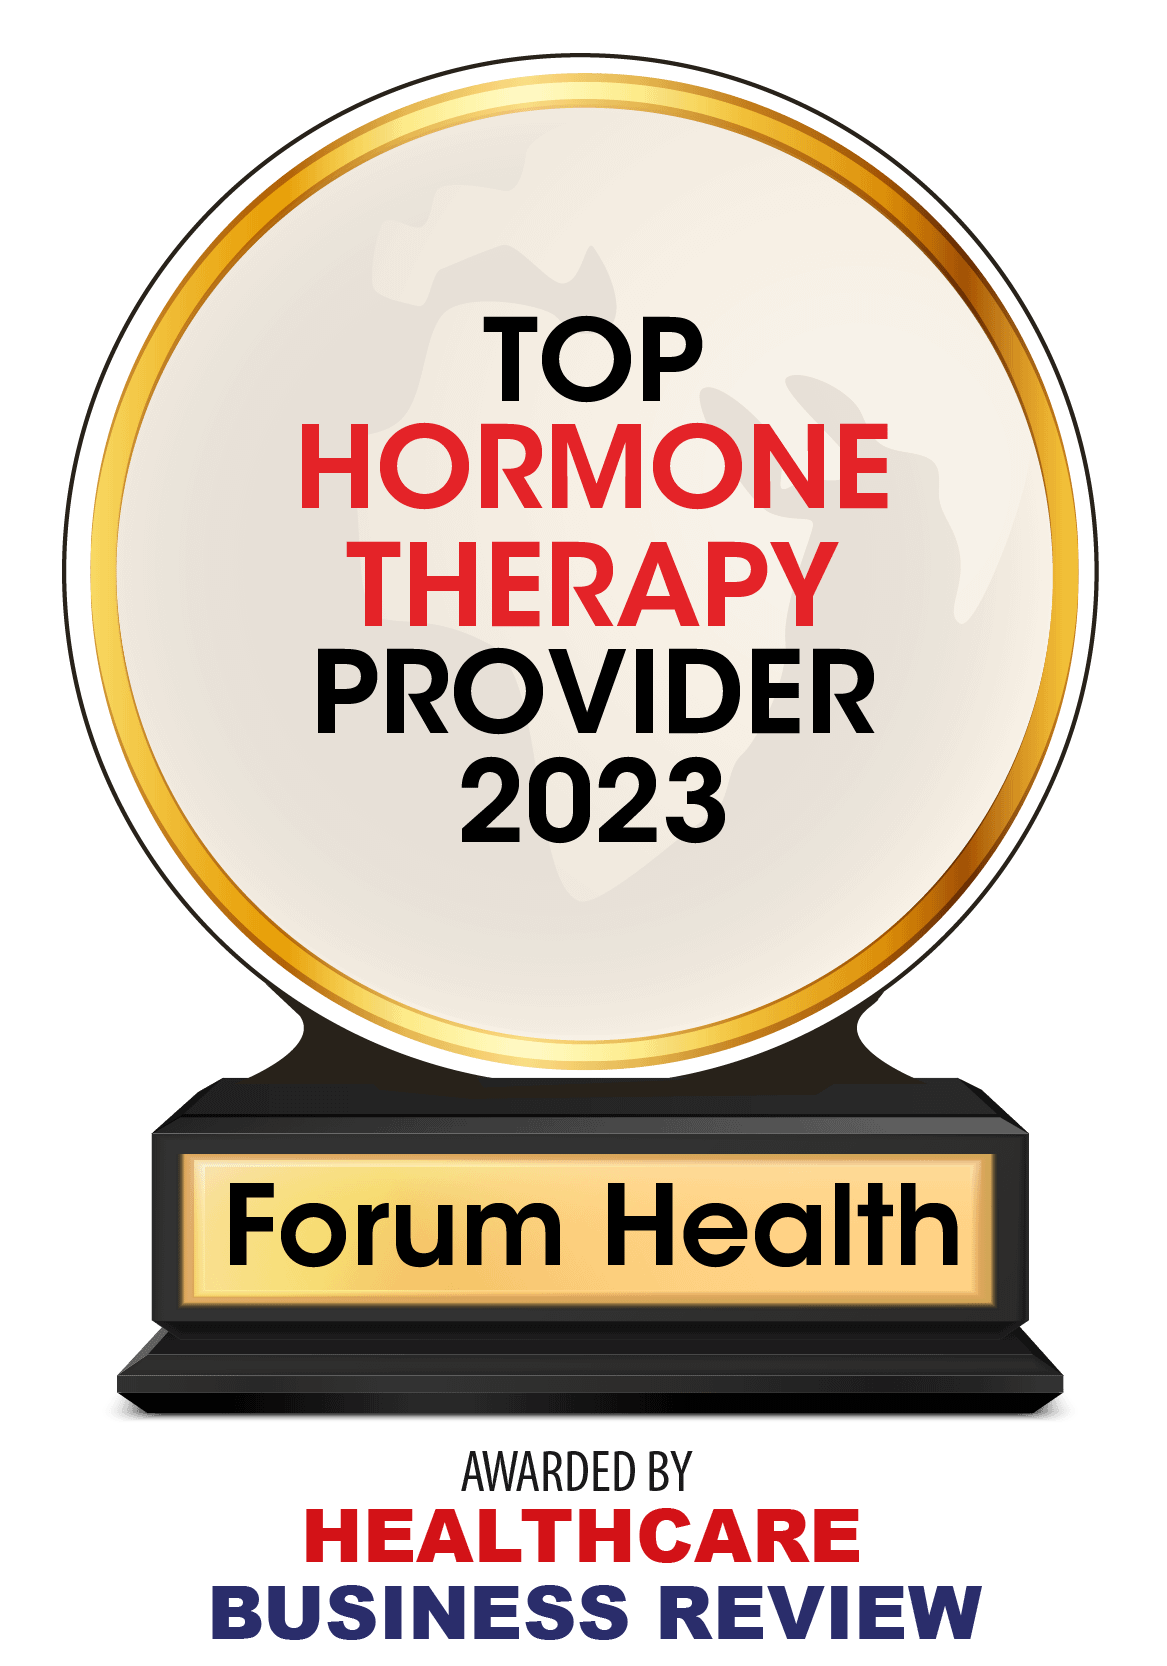 909314_Forum Health_Award logo-01